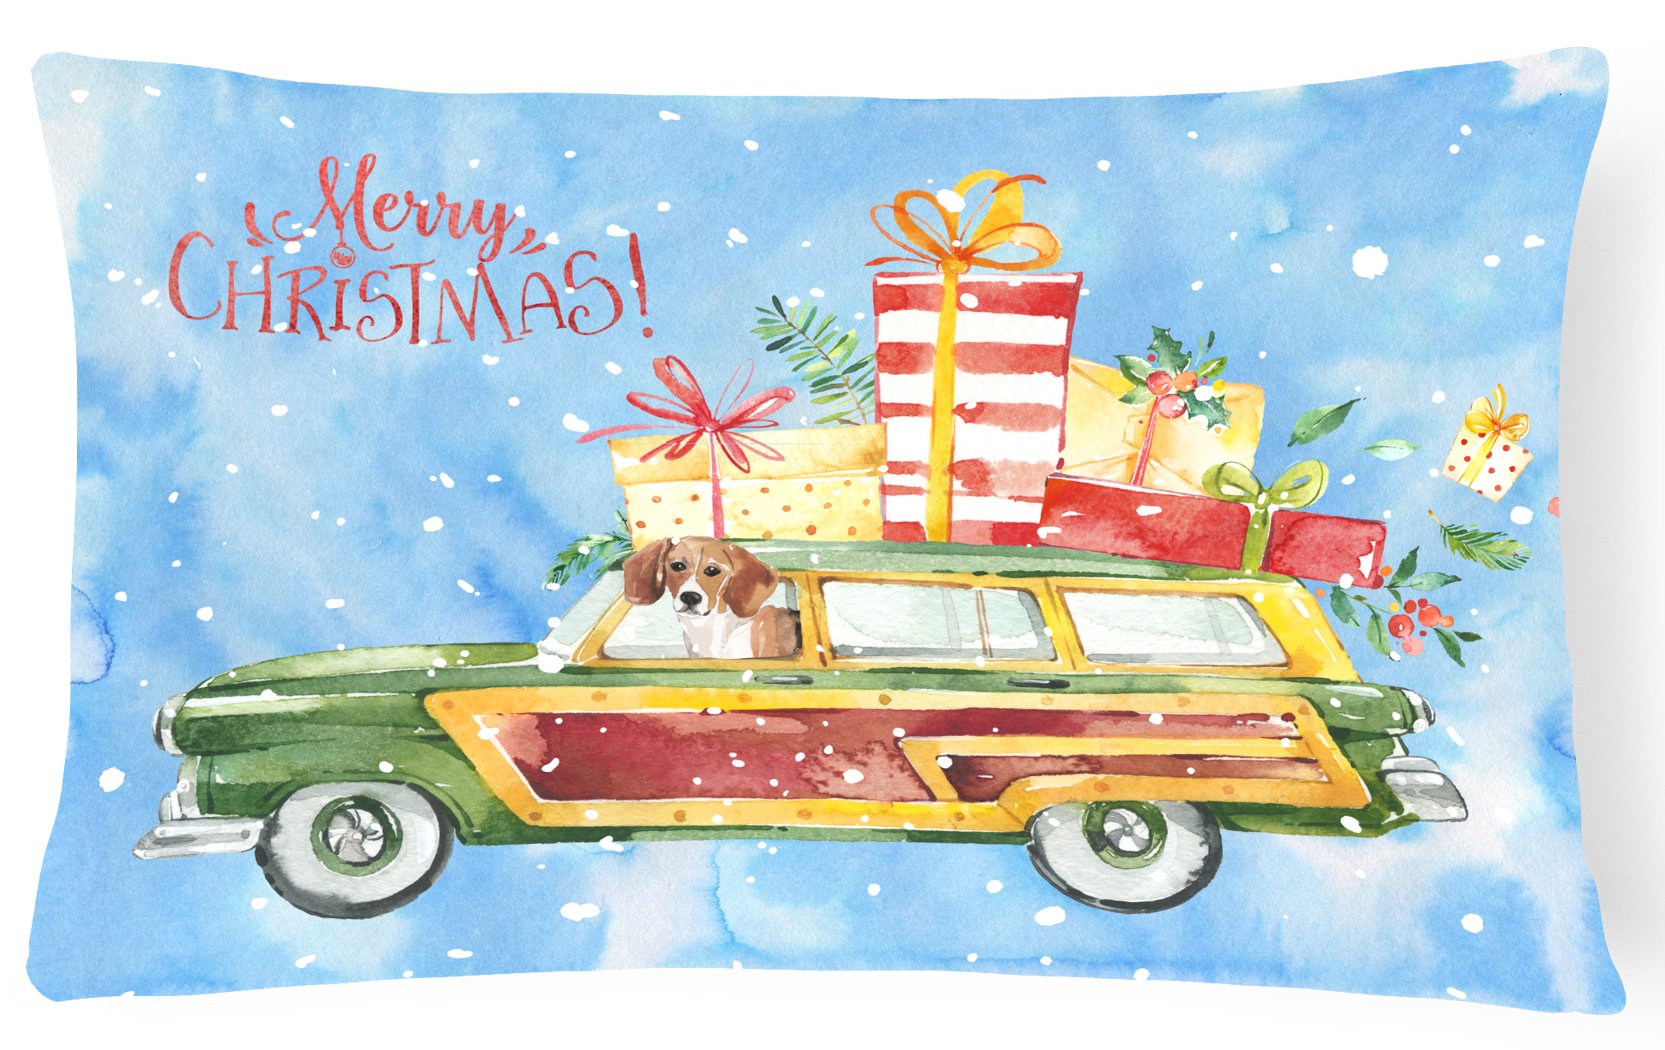 Merry Christmas Beagle Canvas Fabric Decorative Pillow CK2442PW1216 by Caroline's Treasures